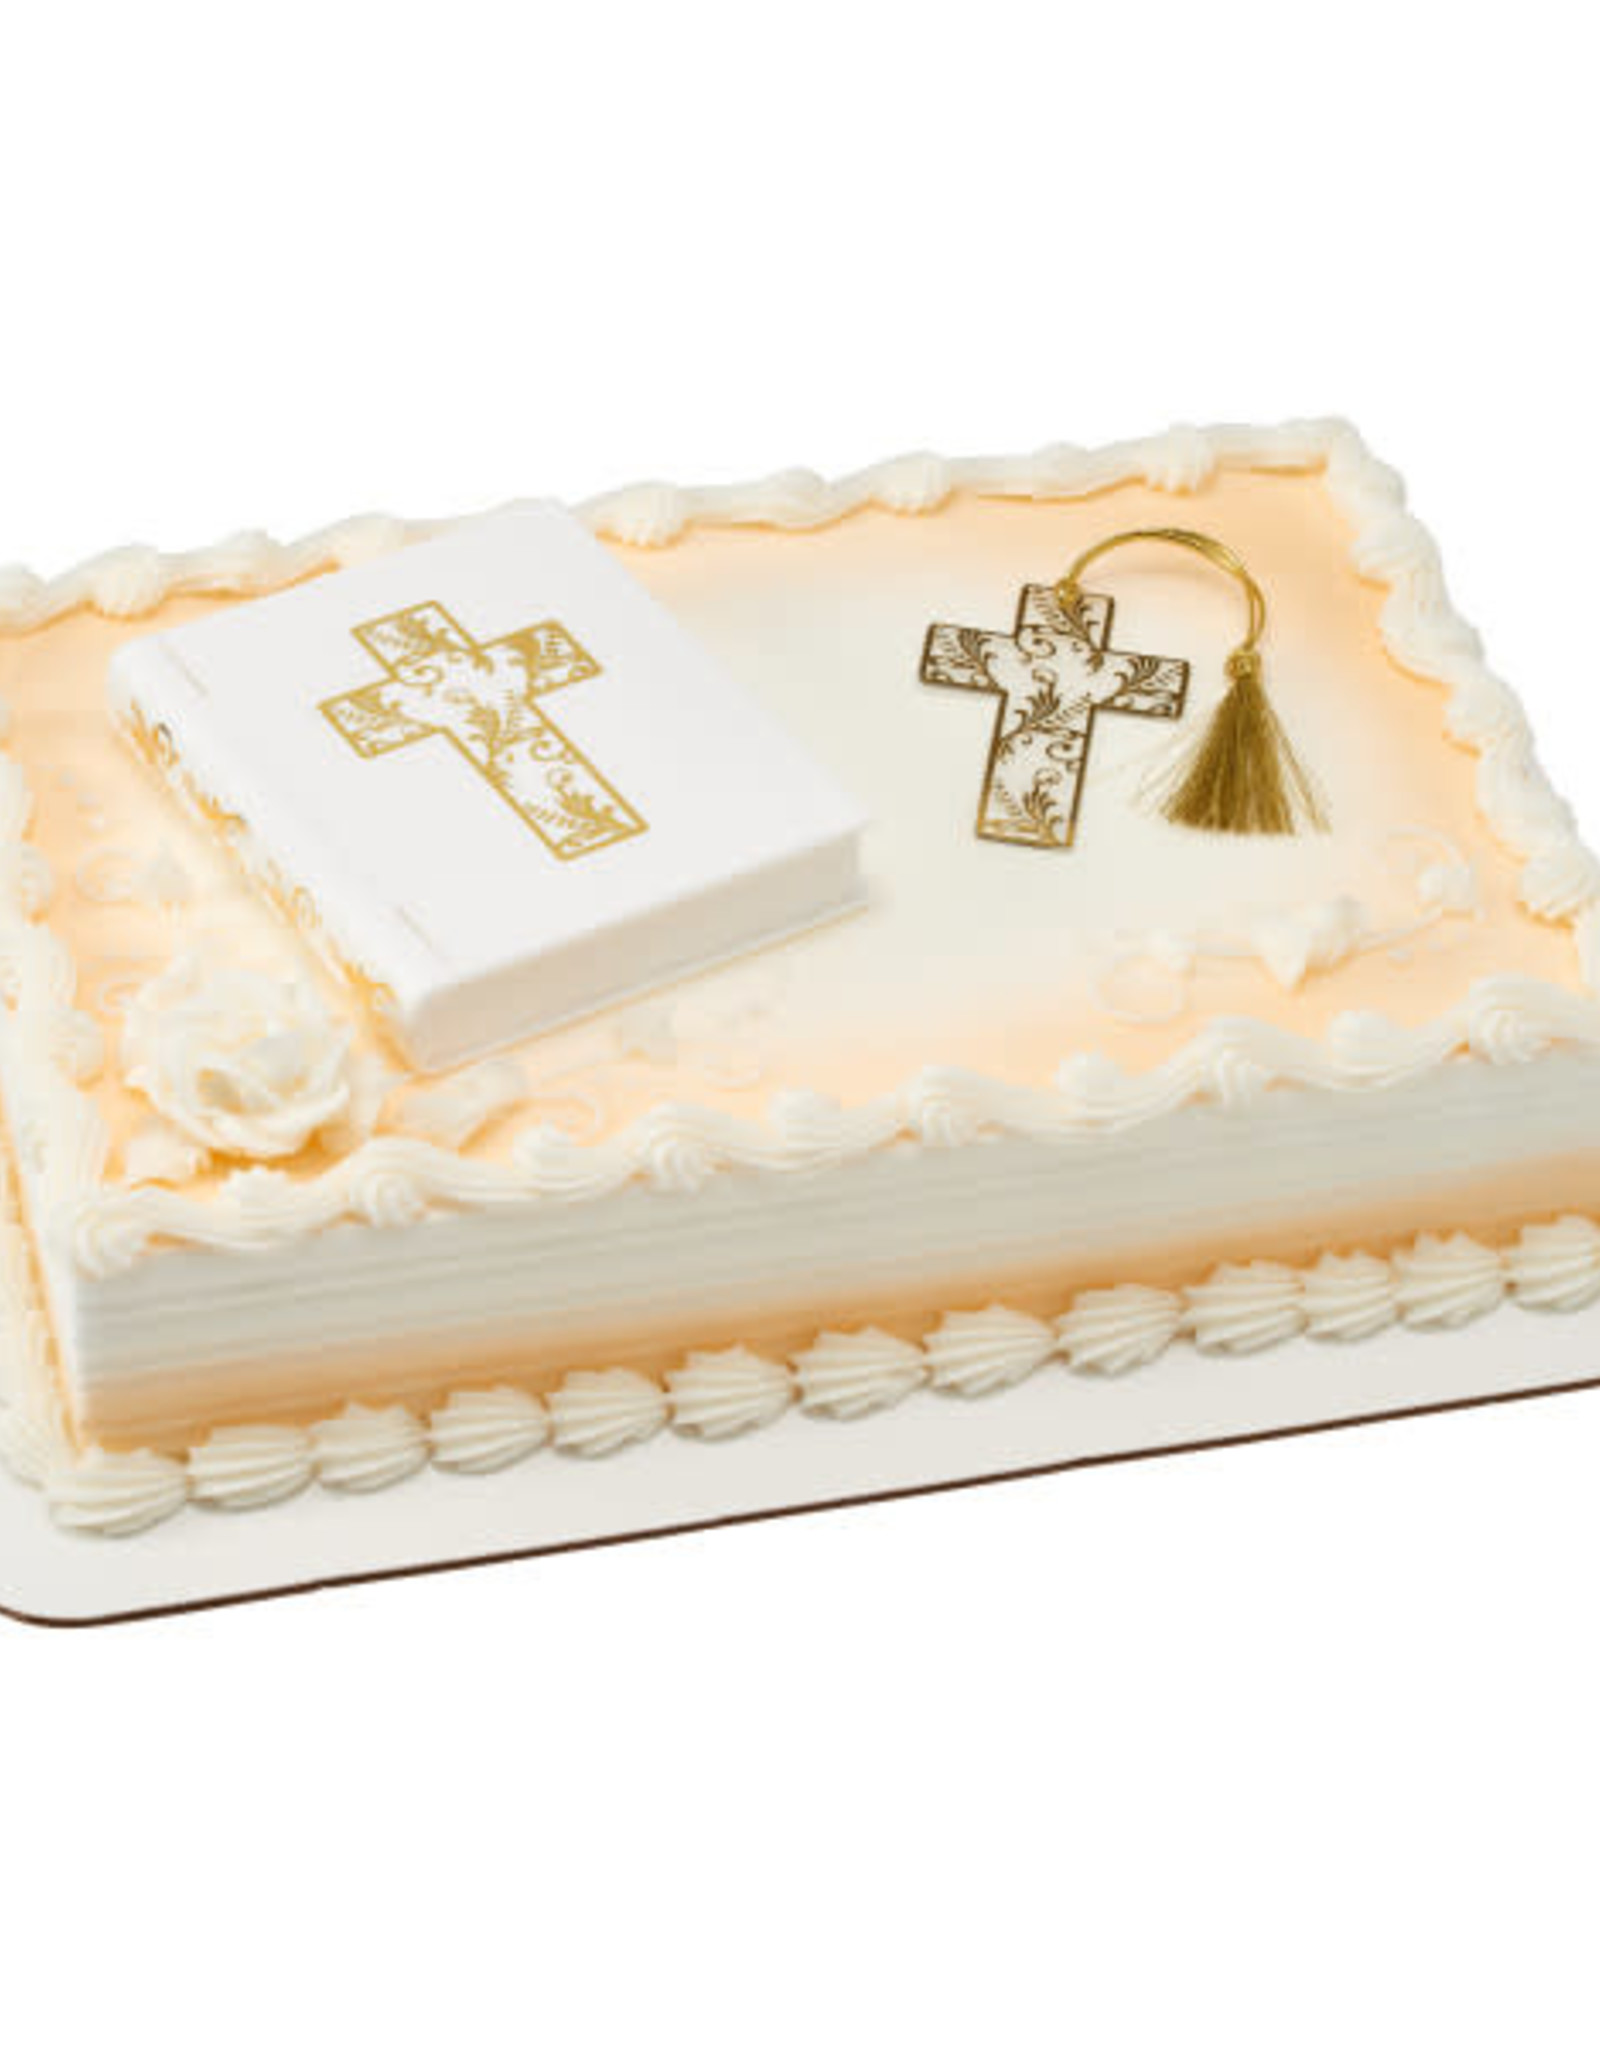 Two-Tier Bible Verse Groom's Cake